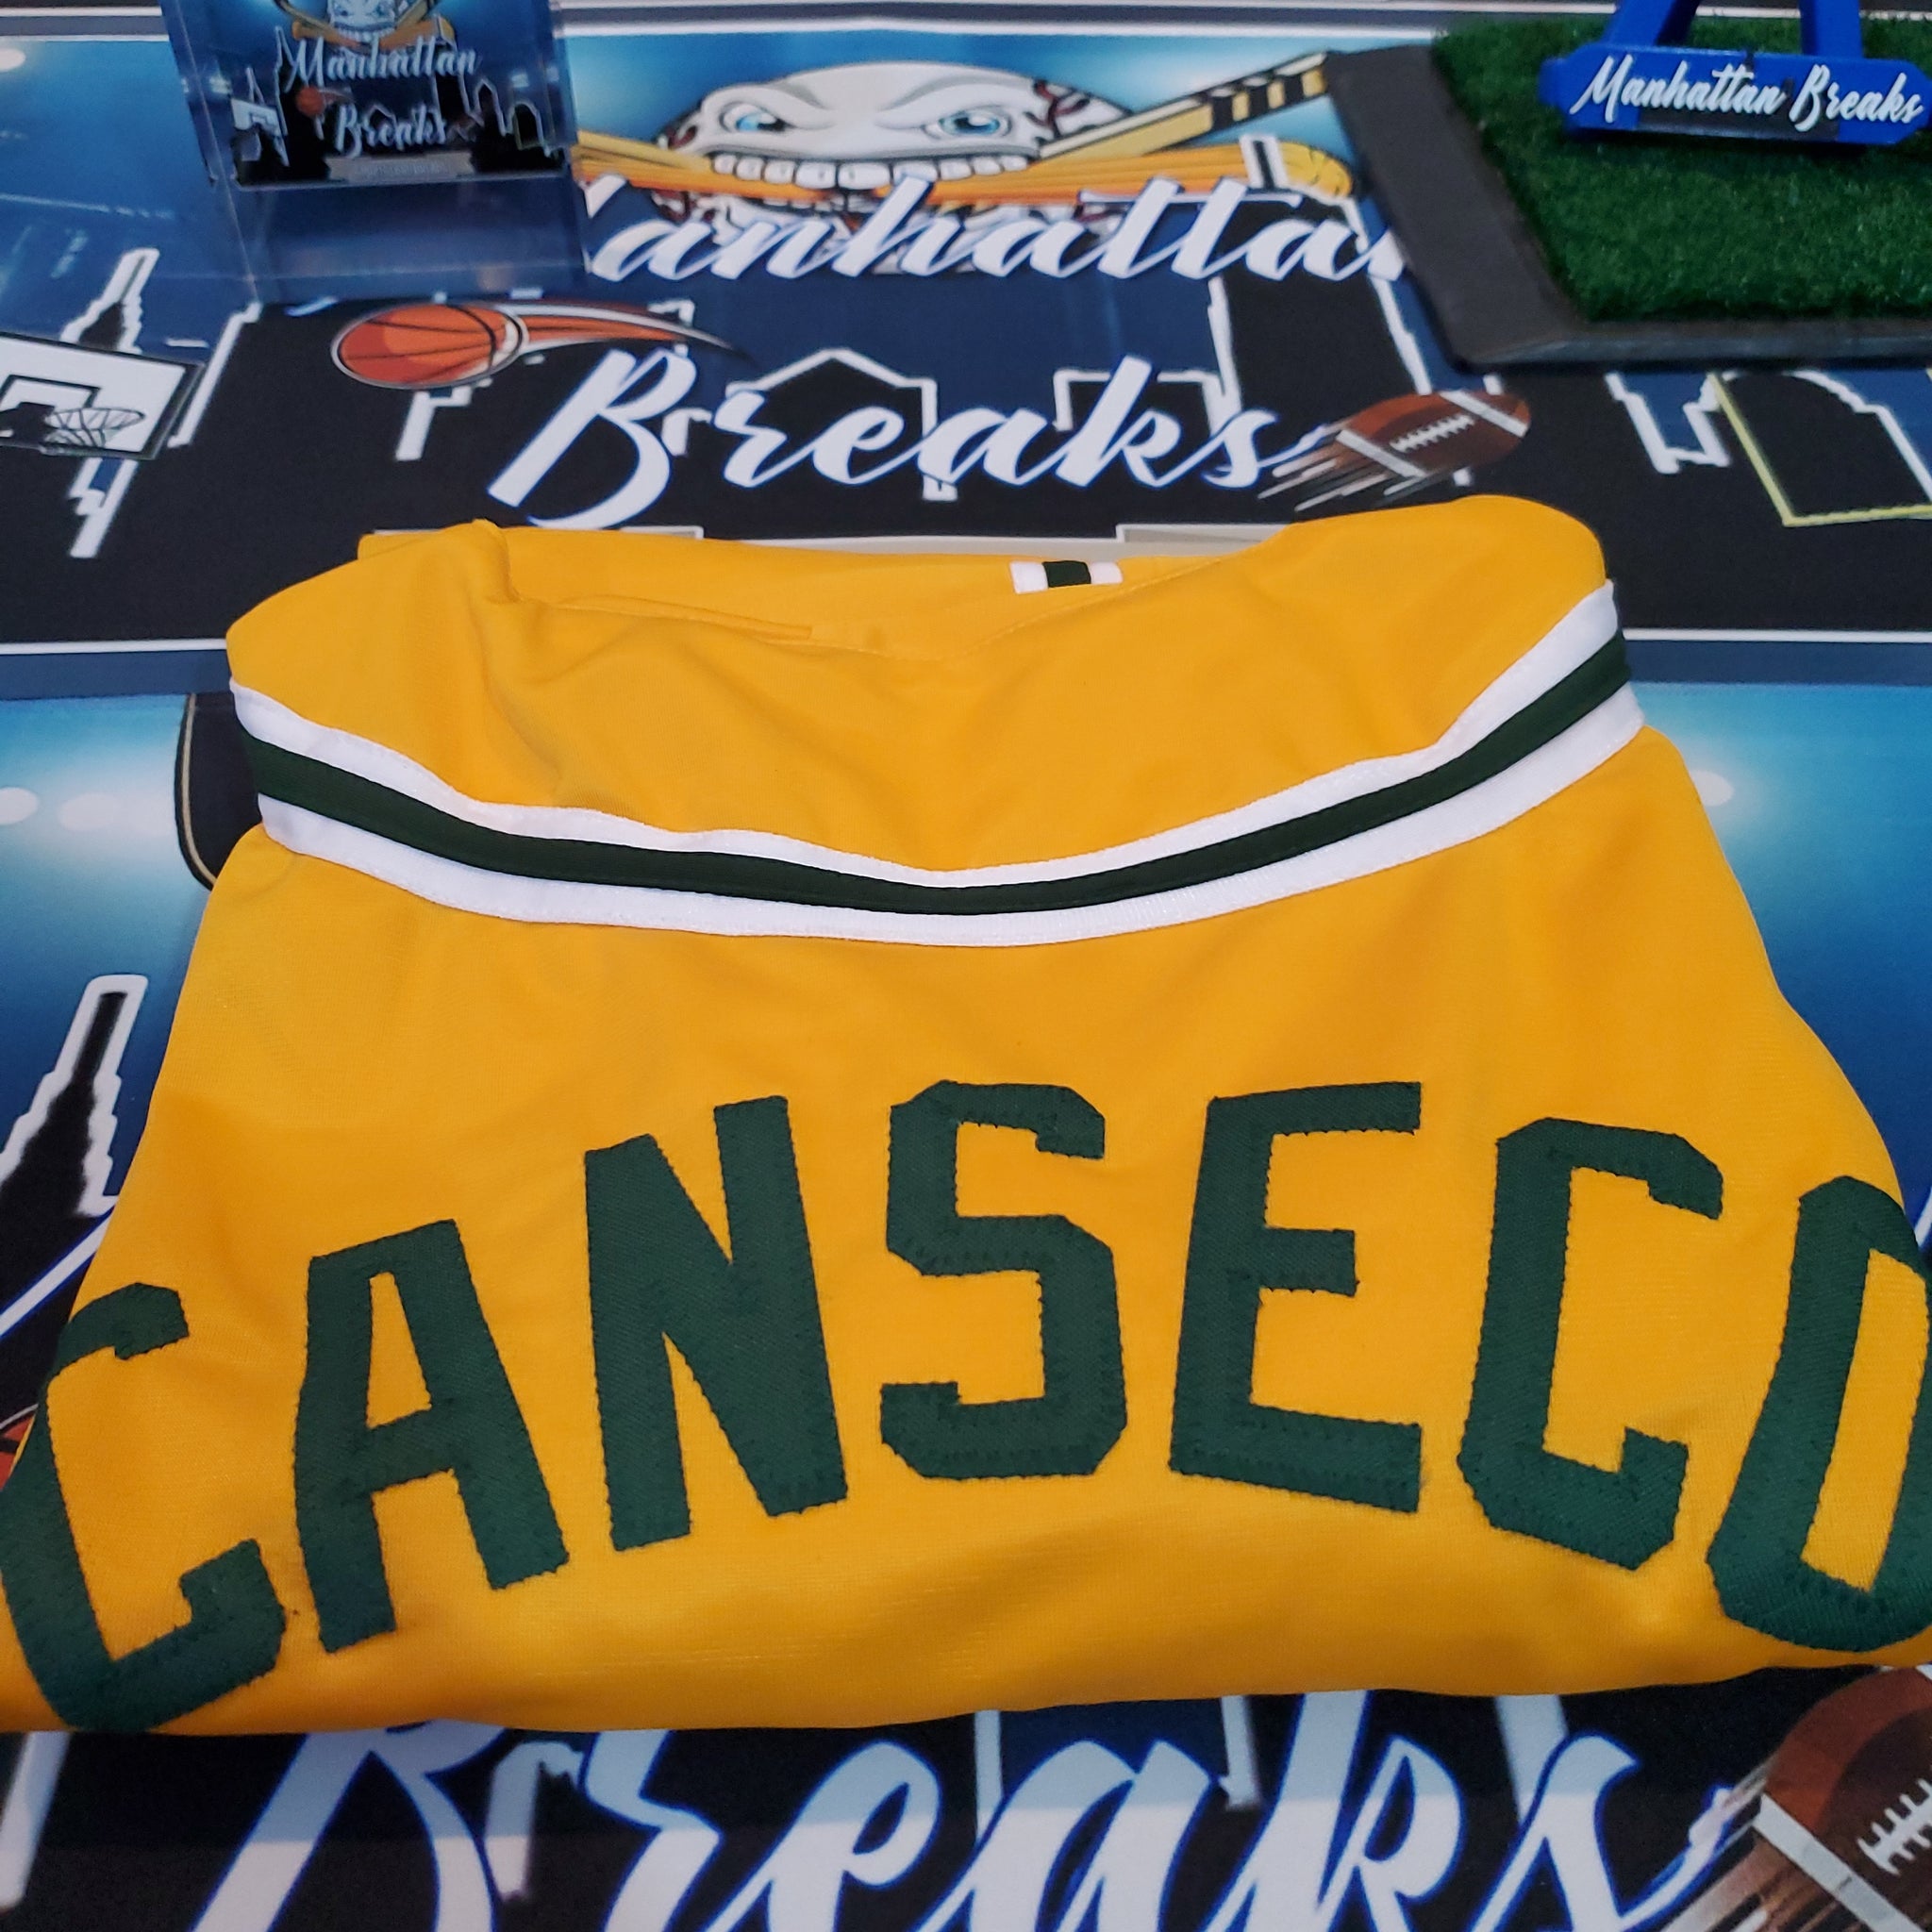 Jose Canseco Juiced Autographed New York Custom Baseball Jersey - BAS COA